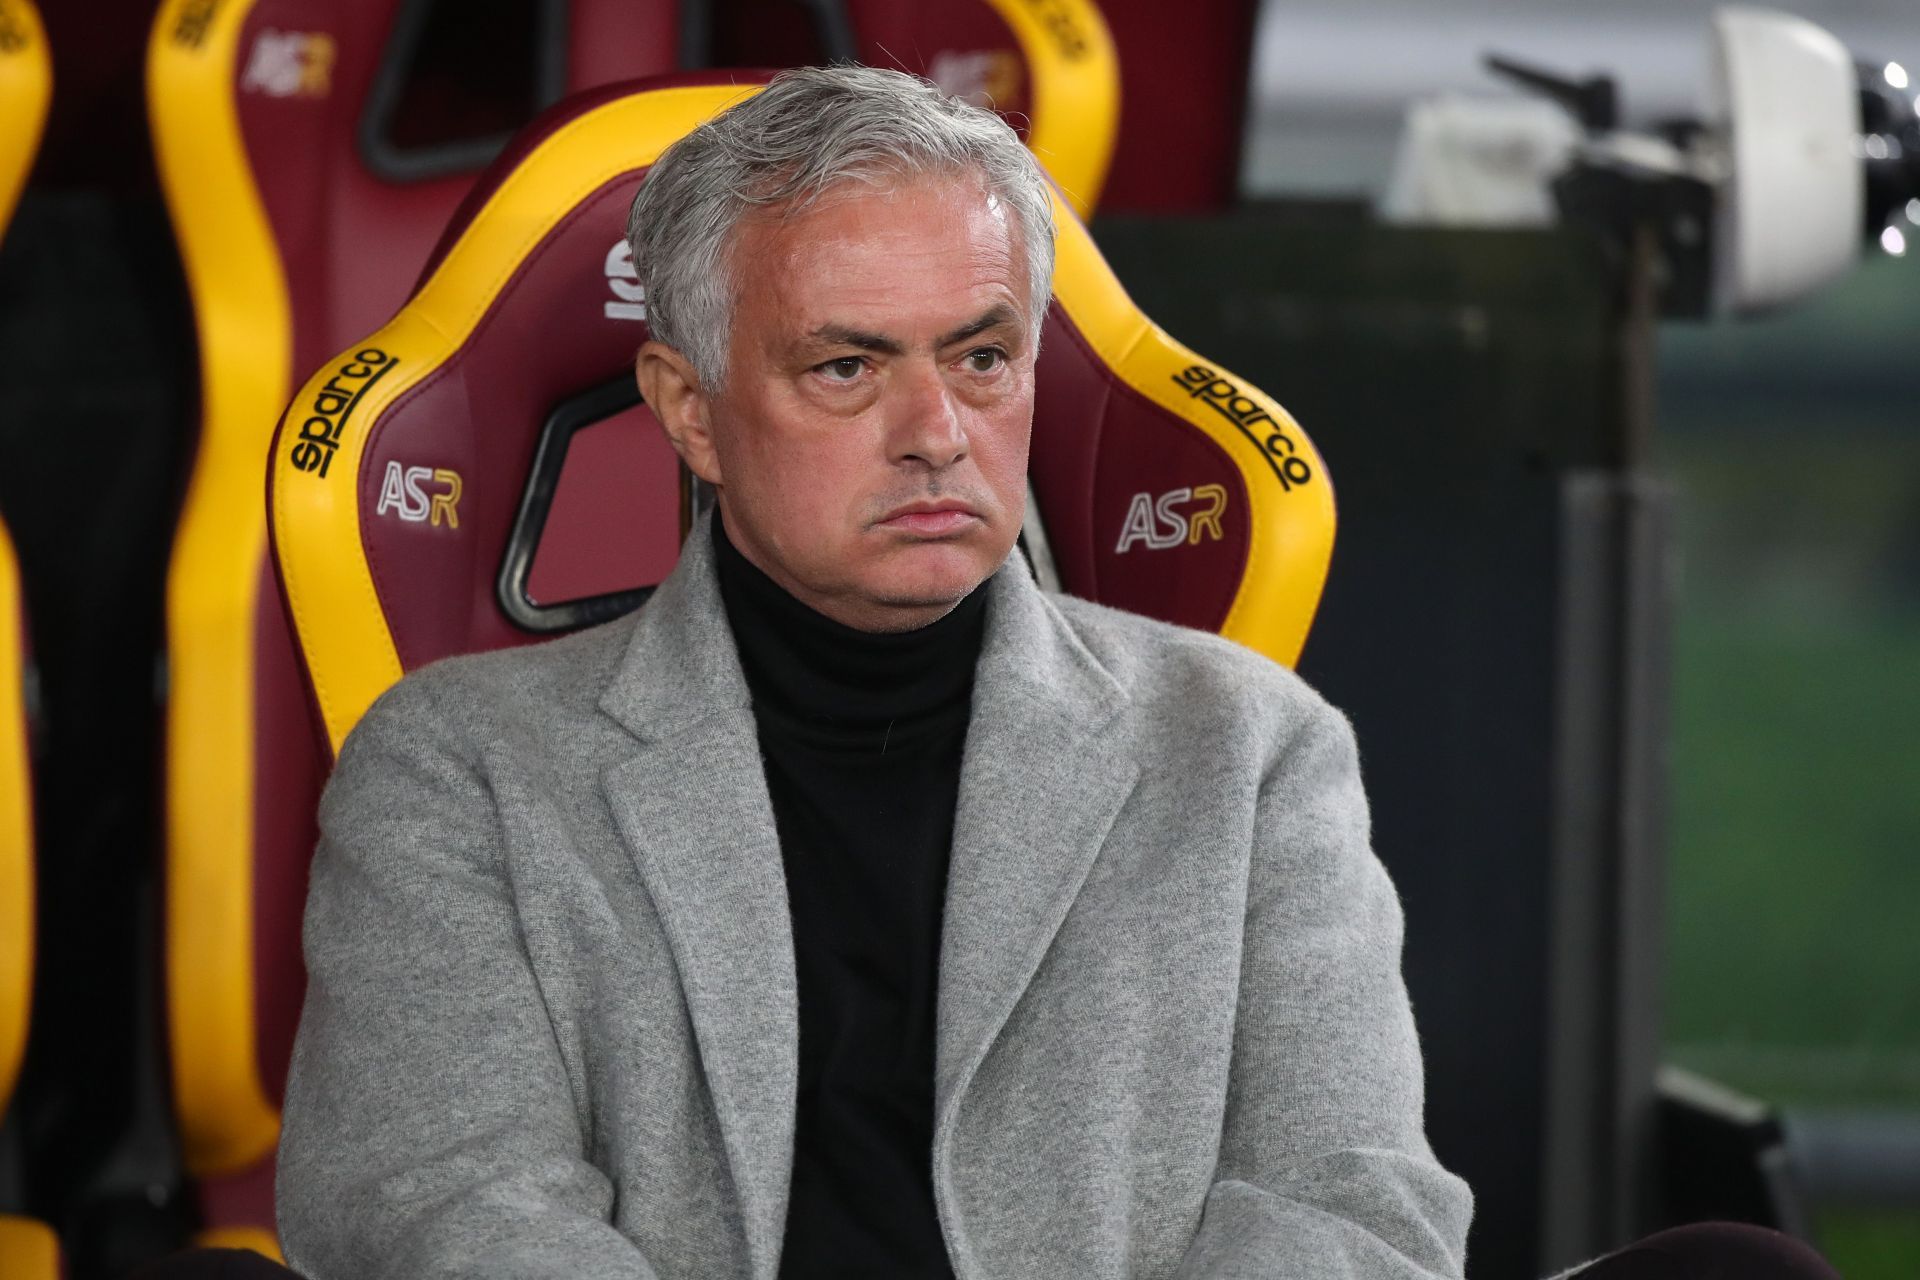 Jose Mourinho cuts a forlorn figure in the Roma dugout